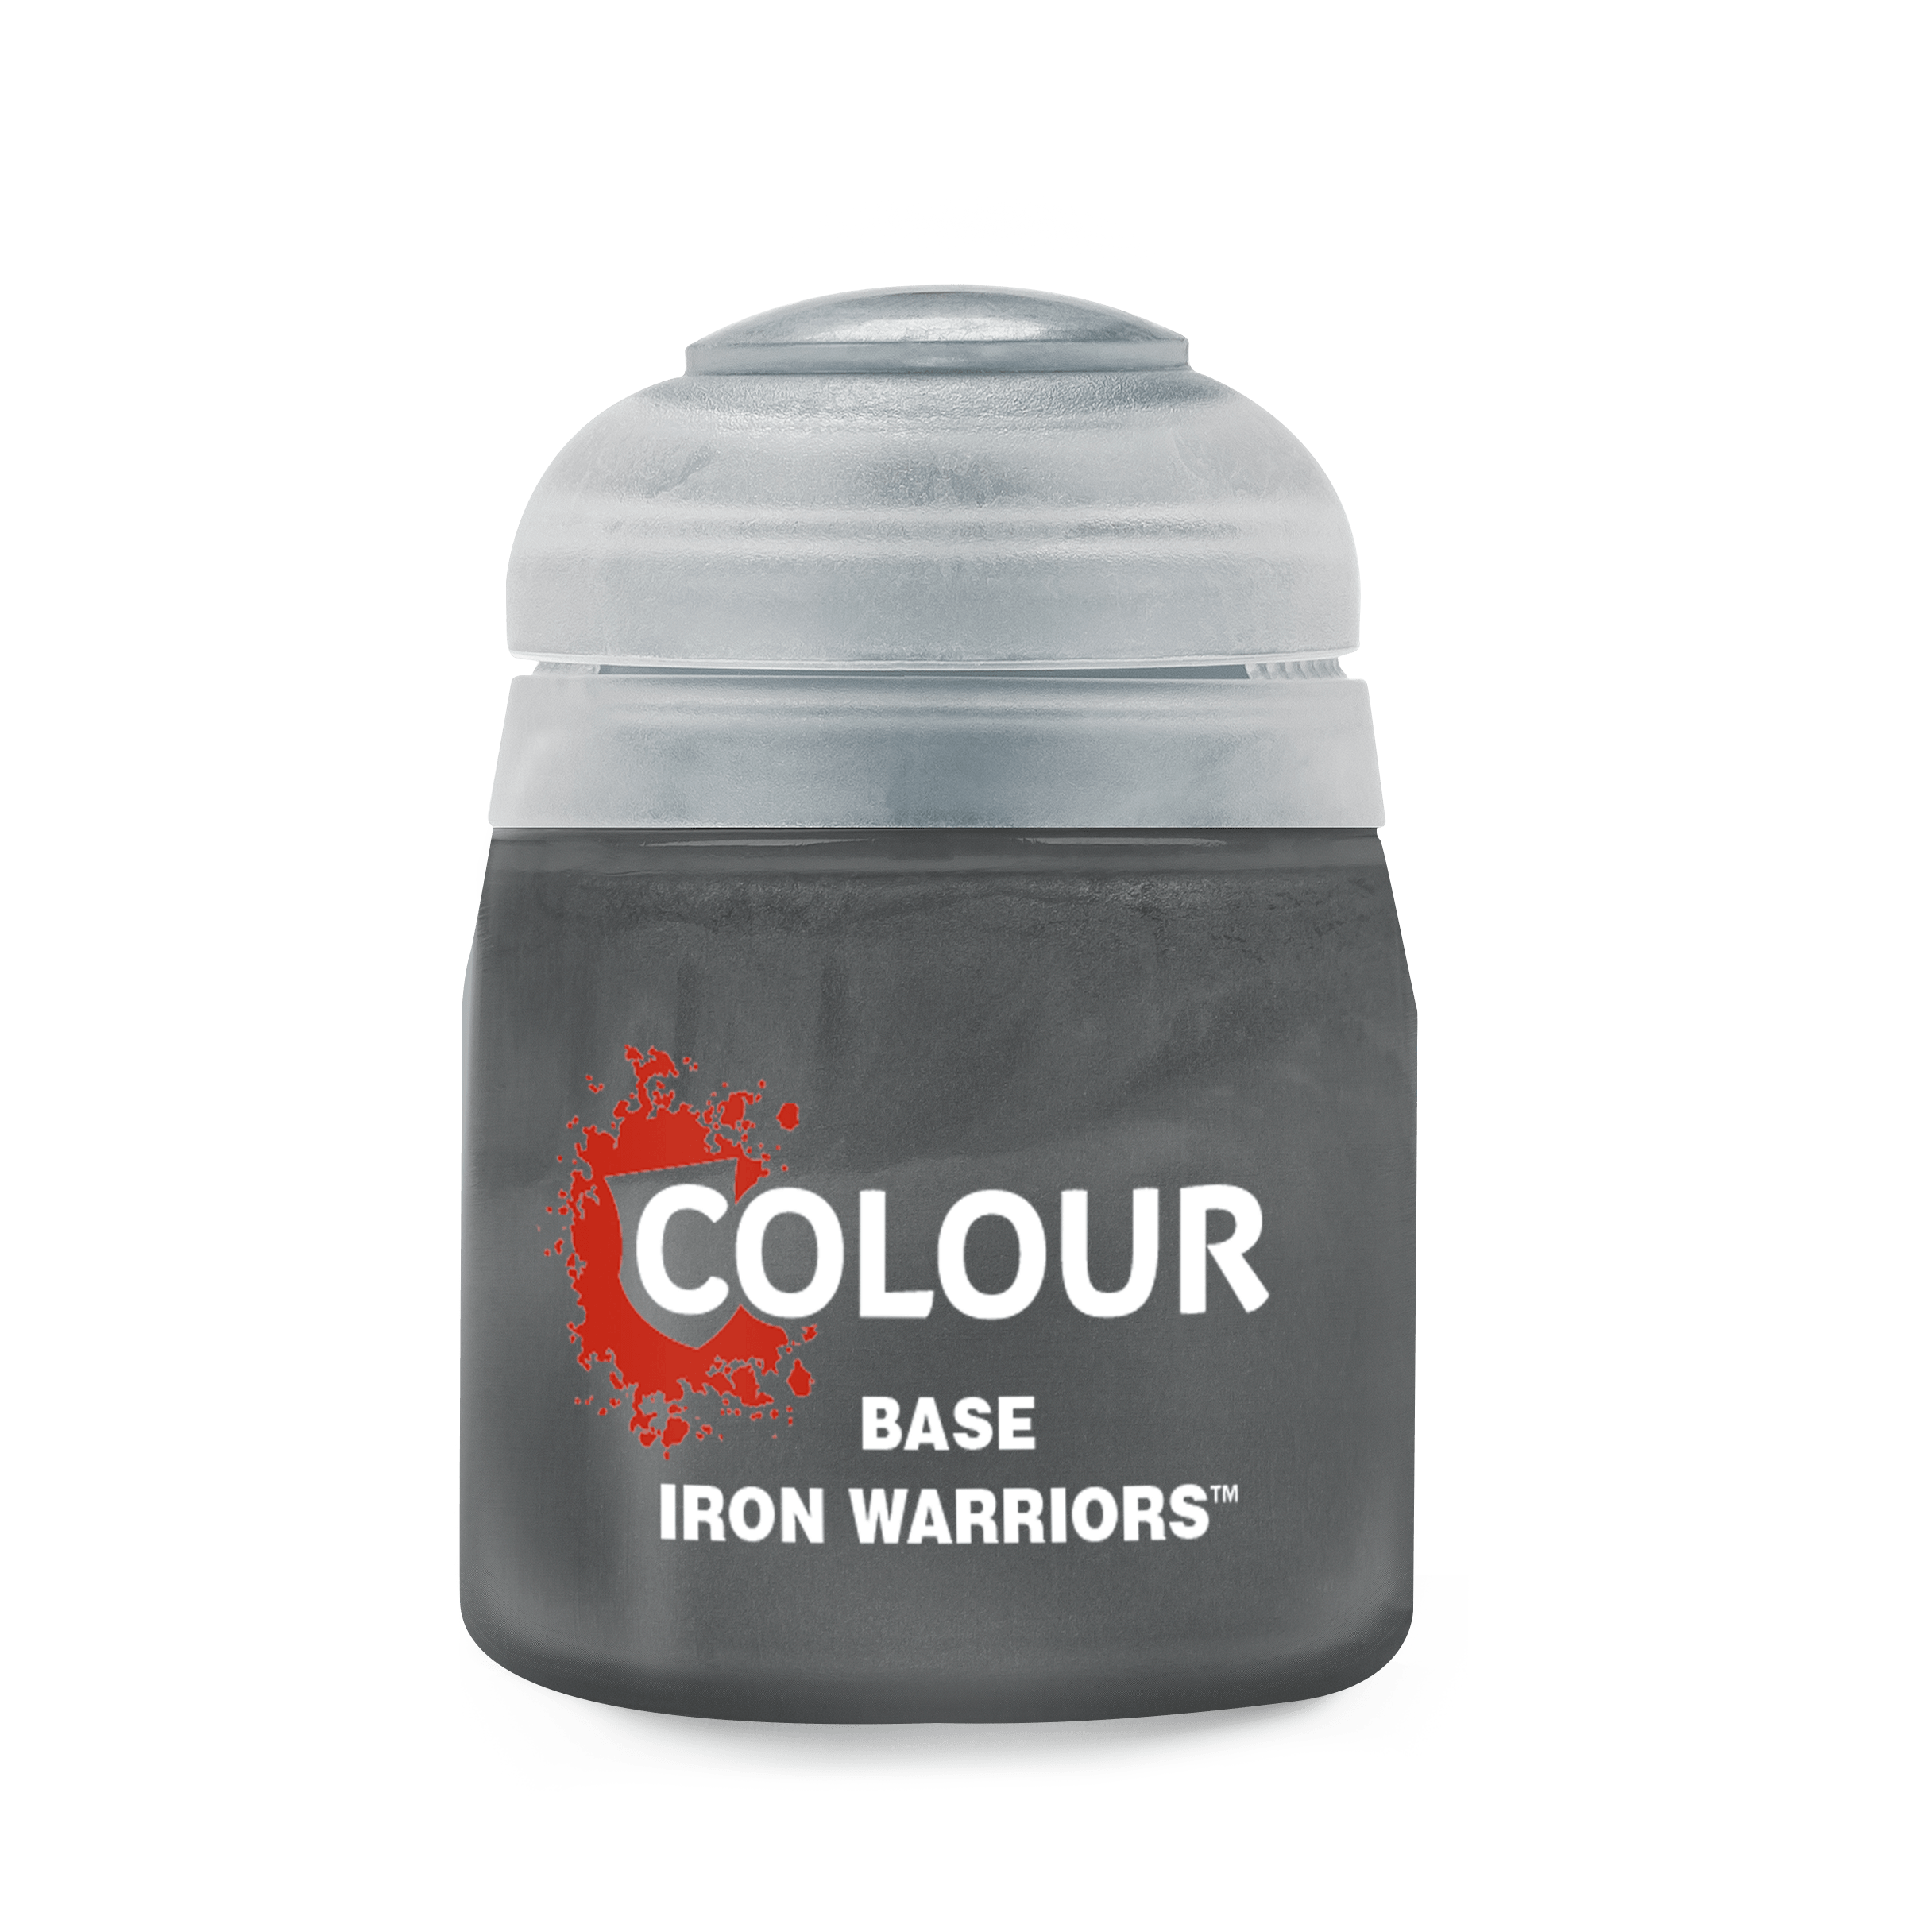 Citadel Base: Iron Warriors